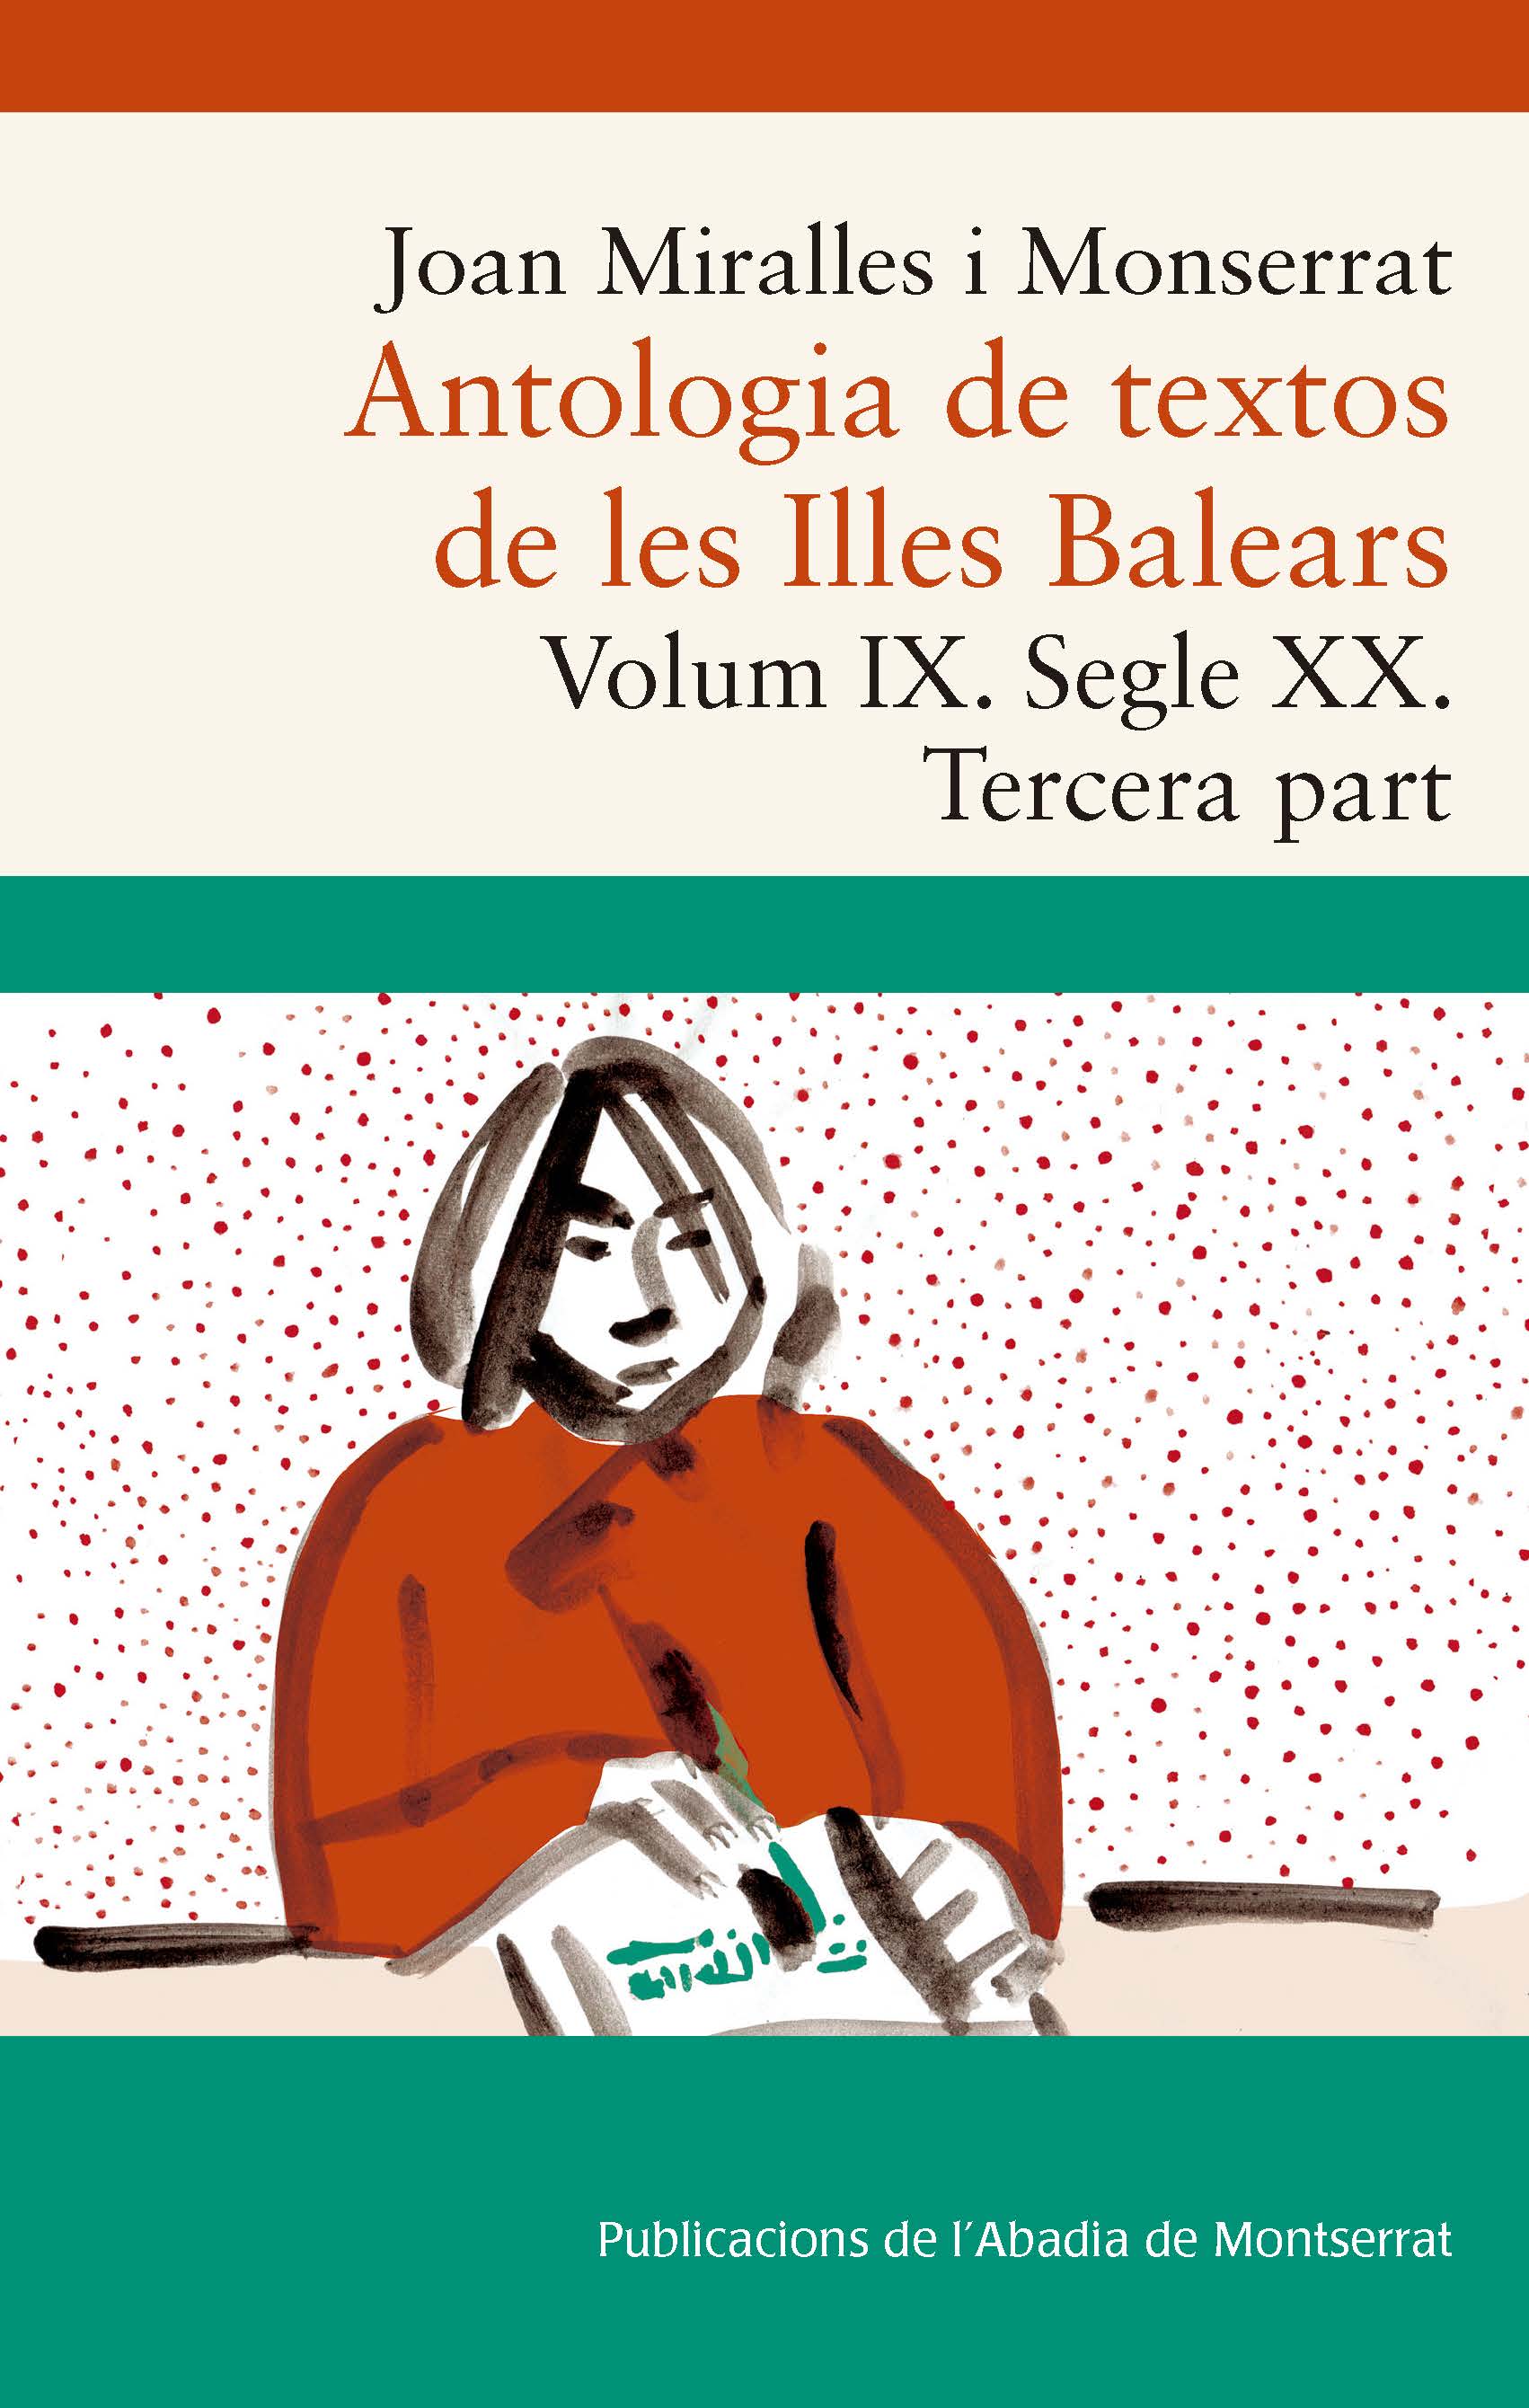 Antologia de textos de les Illes Balears. Volum IX. Segle XX. Tercera part